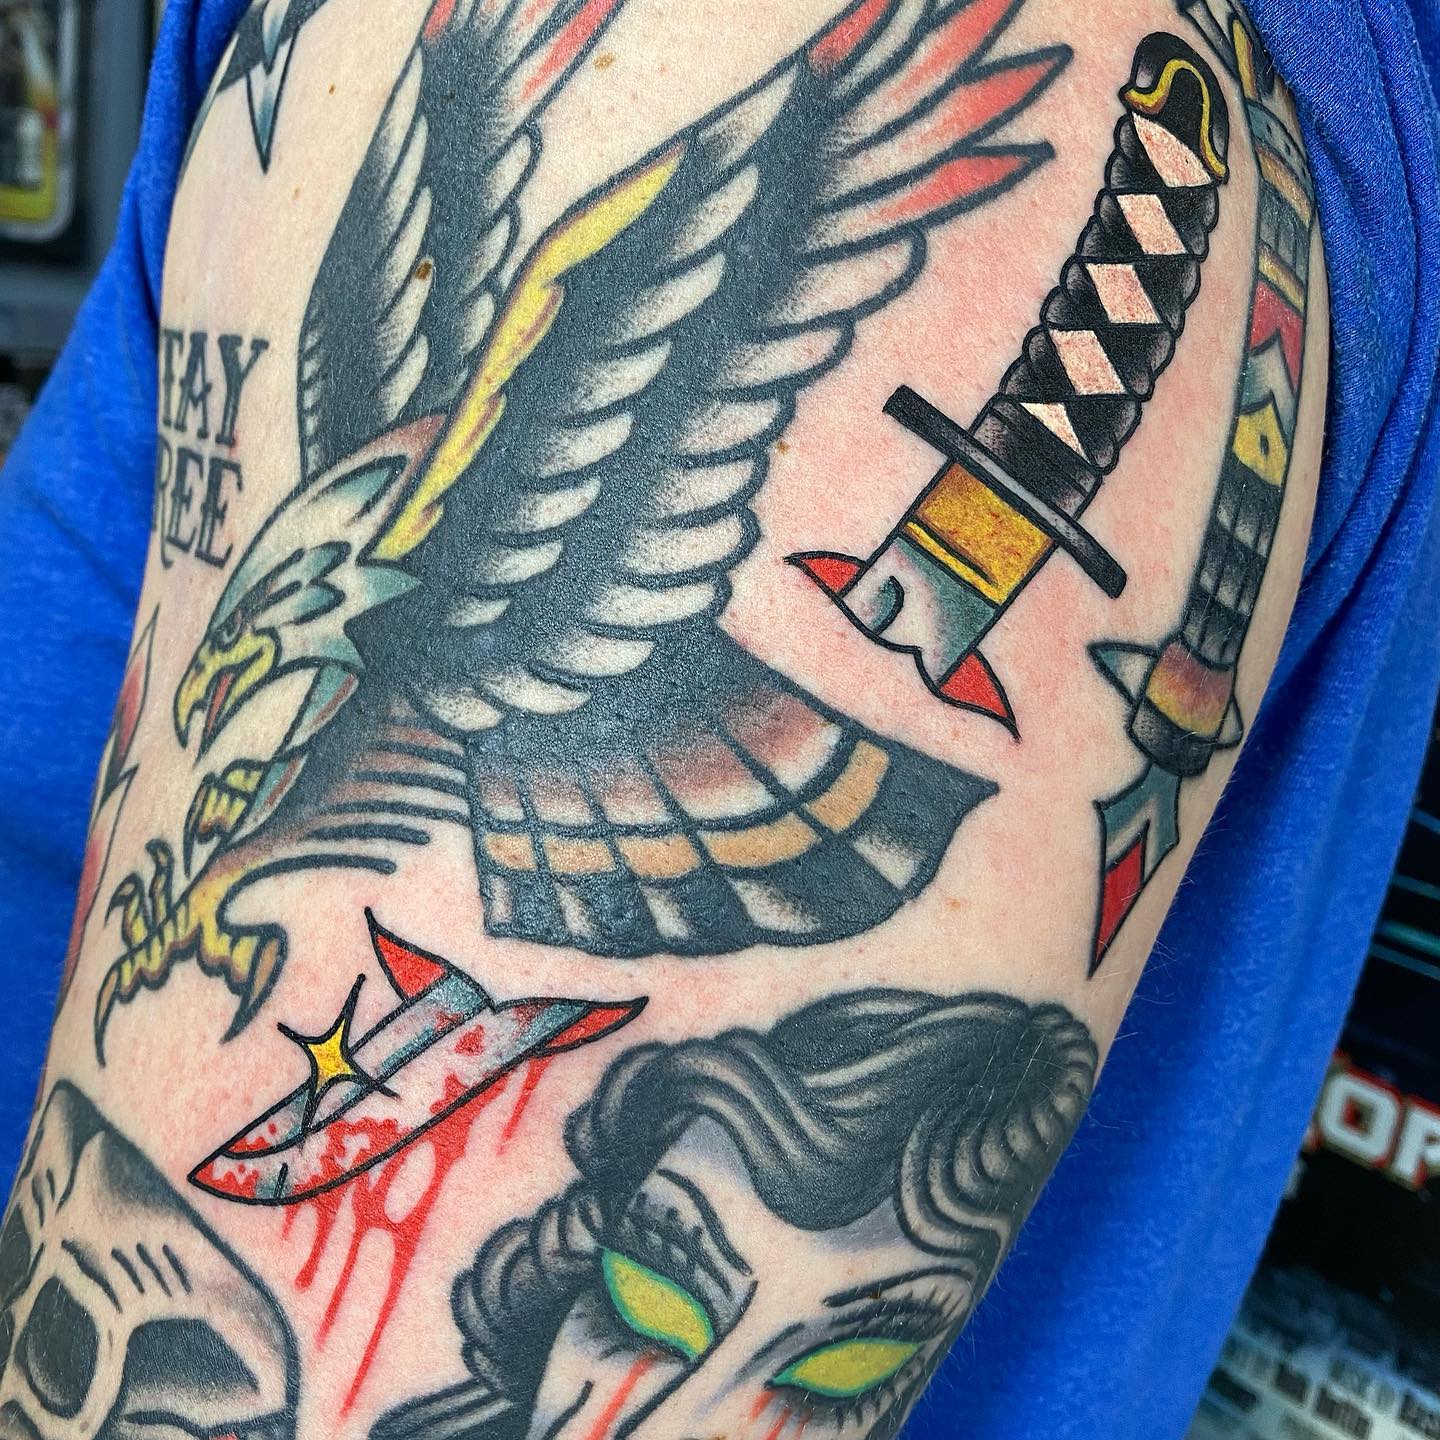 Tatuaje tradicional americano con impresión de águila.